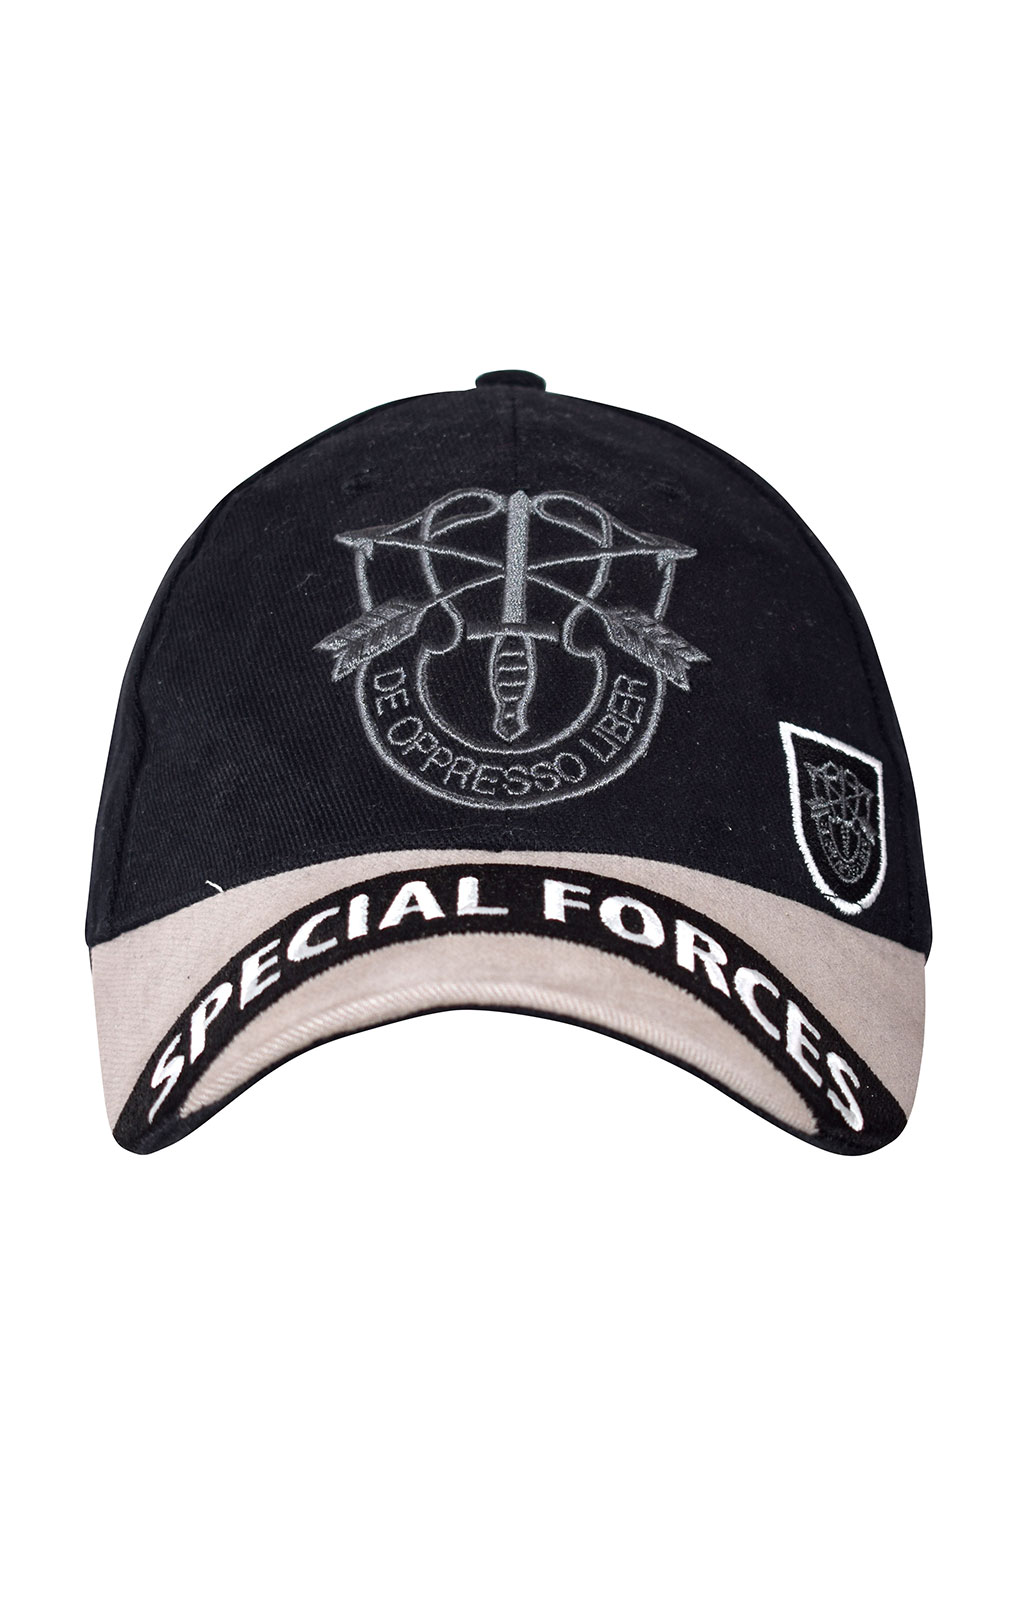 Бейсболка EC SPECIAL FORCES shadow grey (6112) 